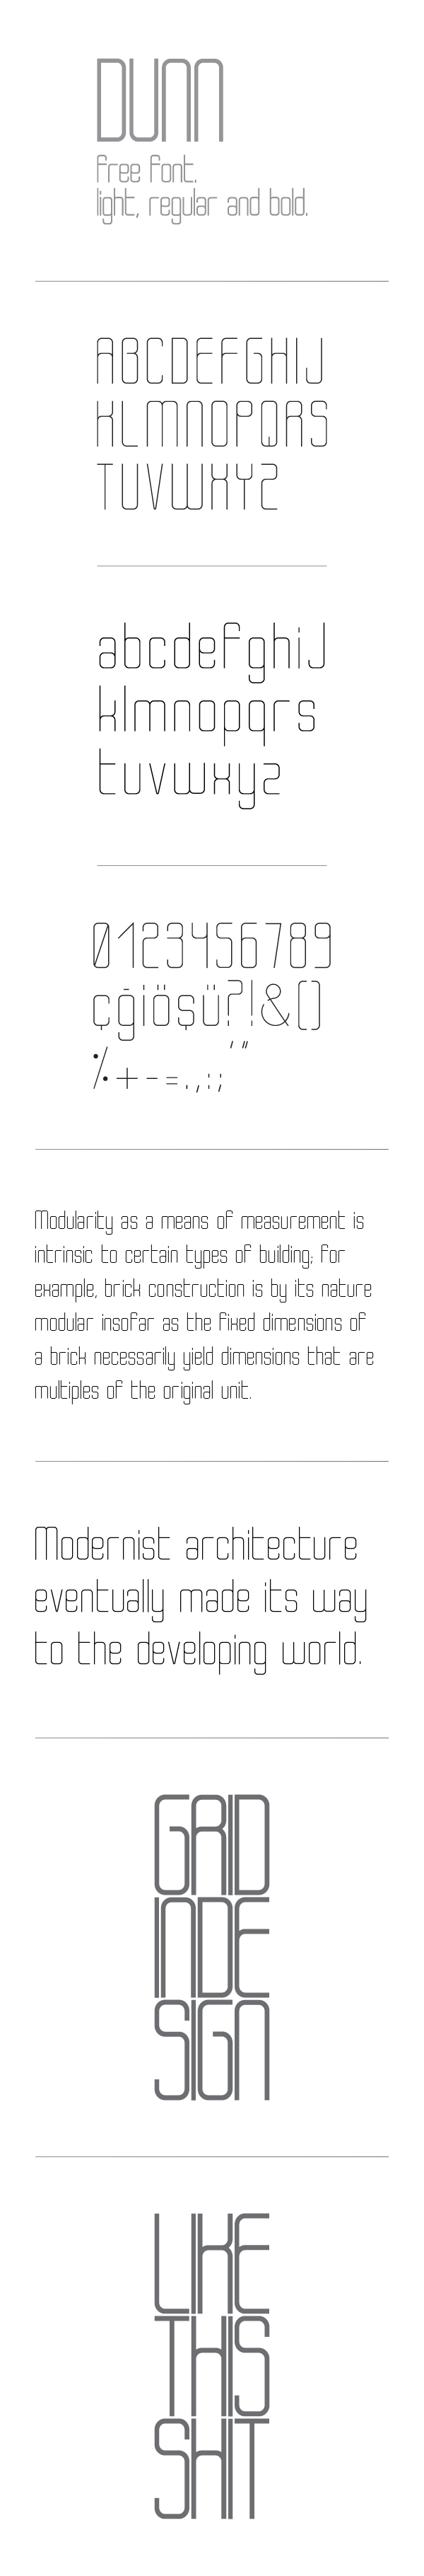 Typeface font modular geometric dunn typodisiac